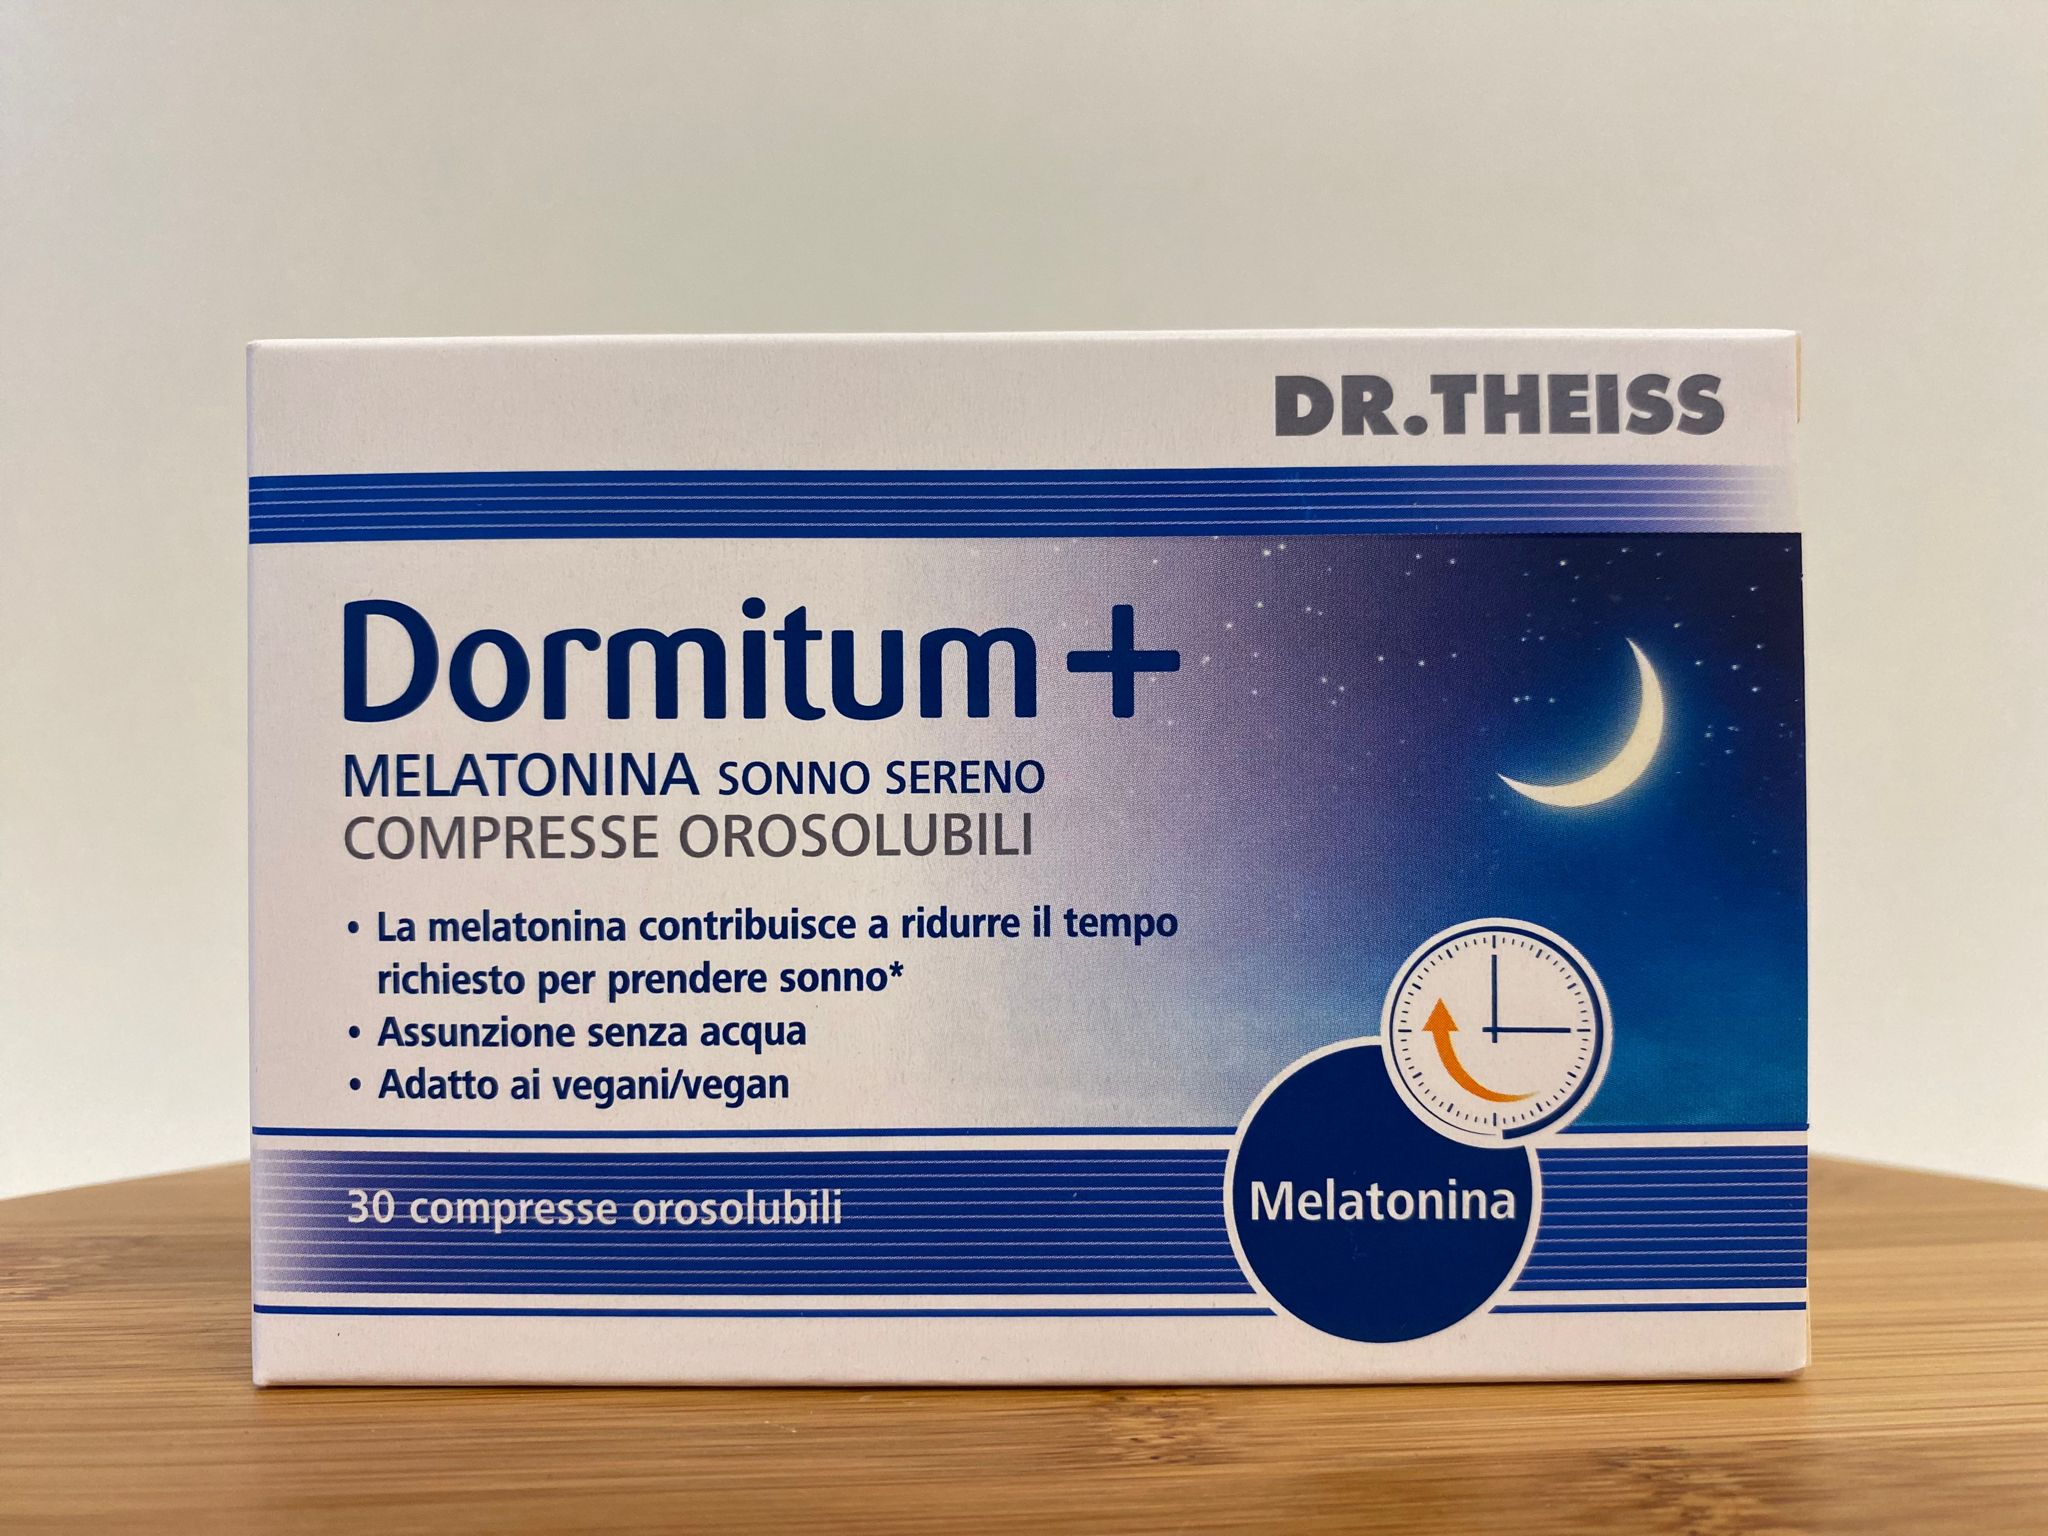 Dr. Theiss: Dormitum + Melatonin